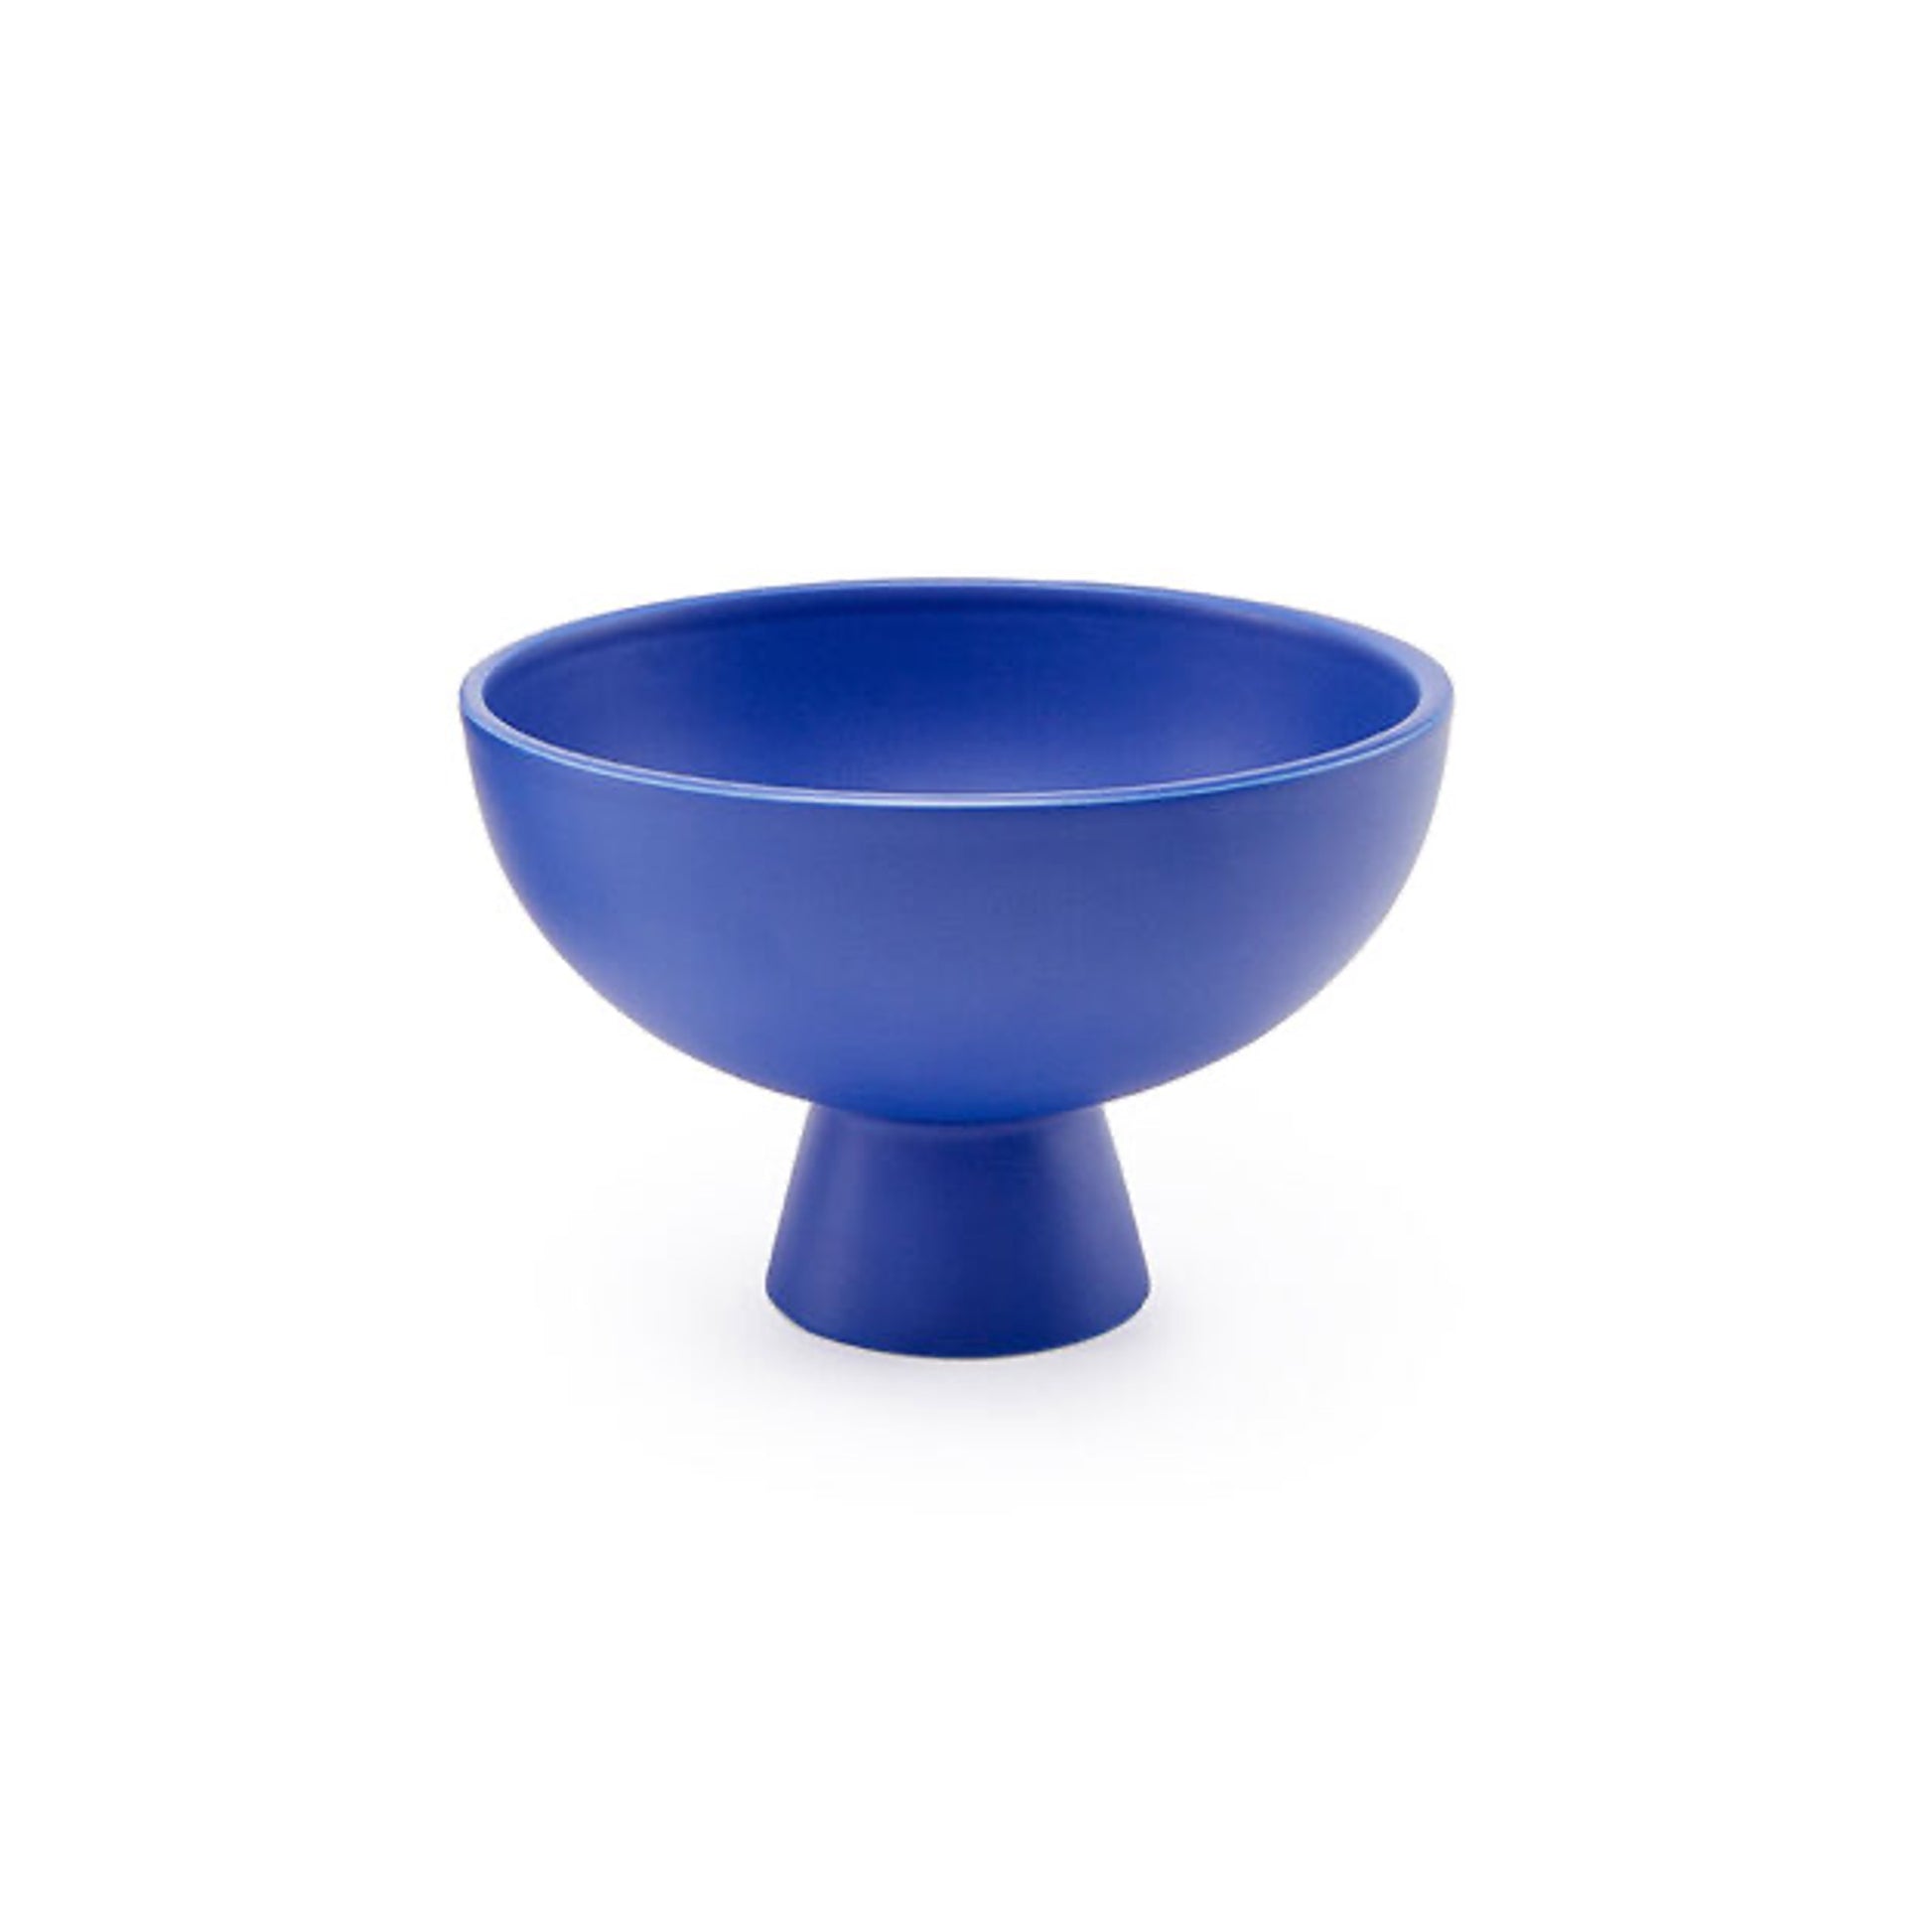 Horizon blue modern bowl